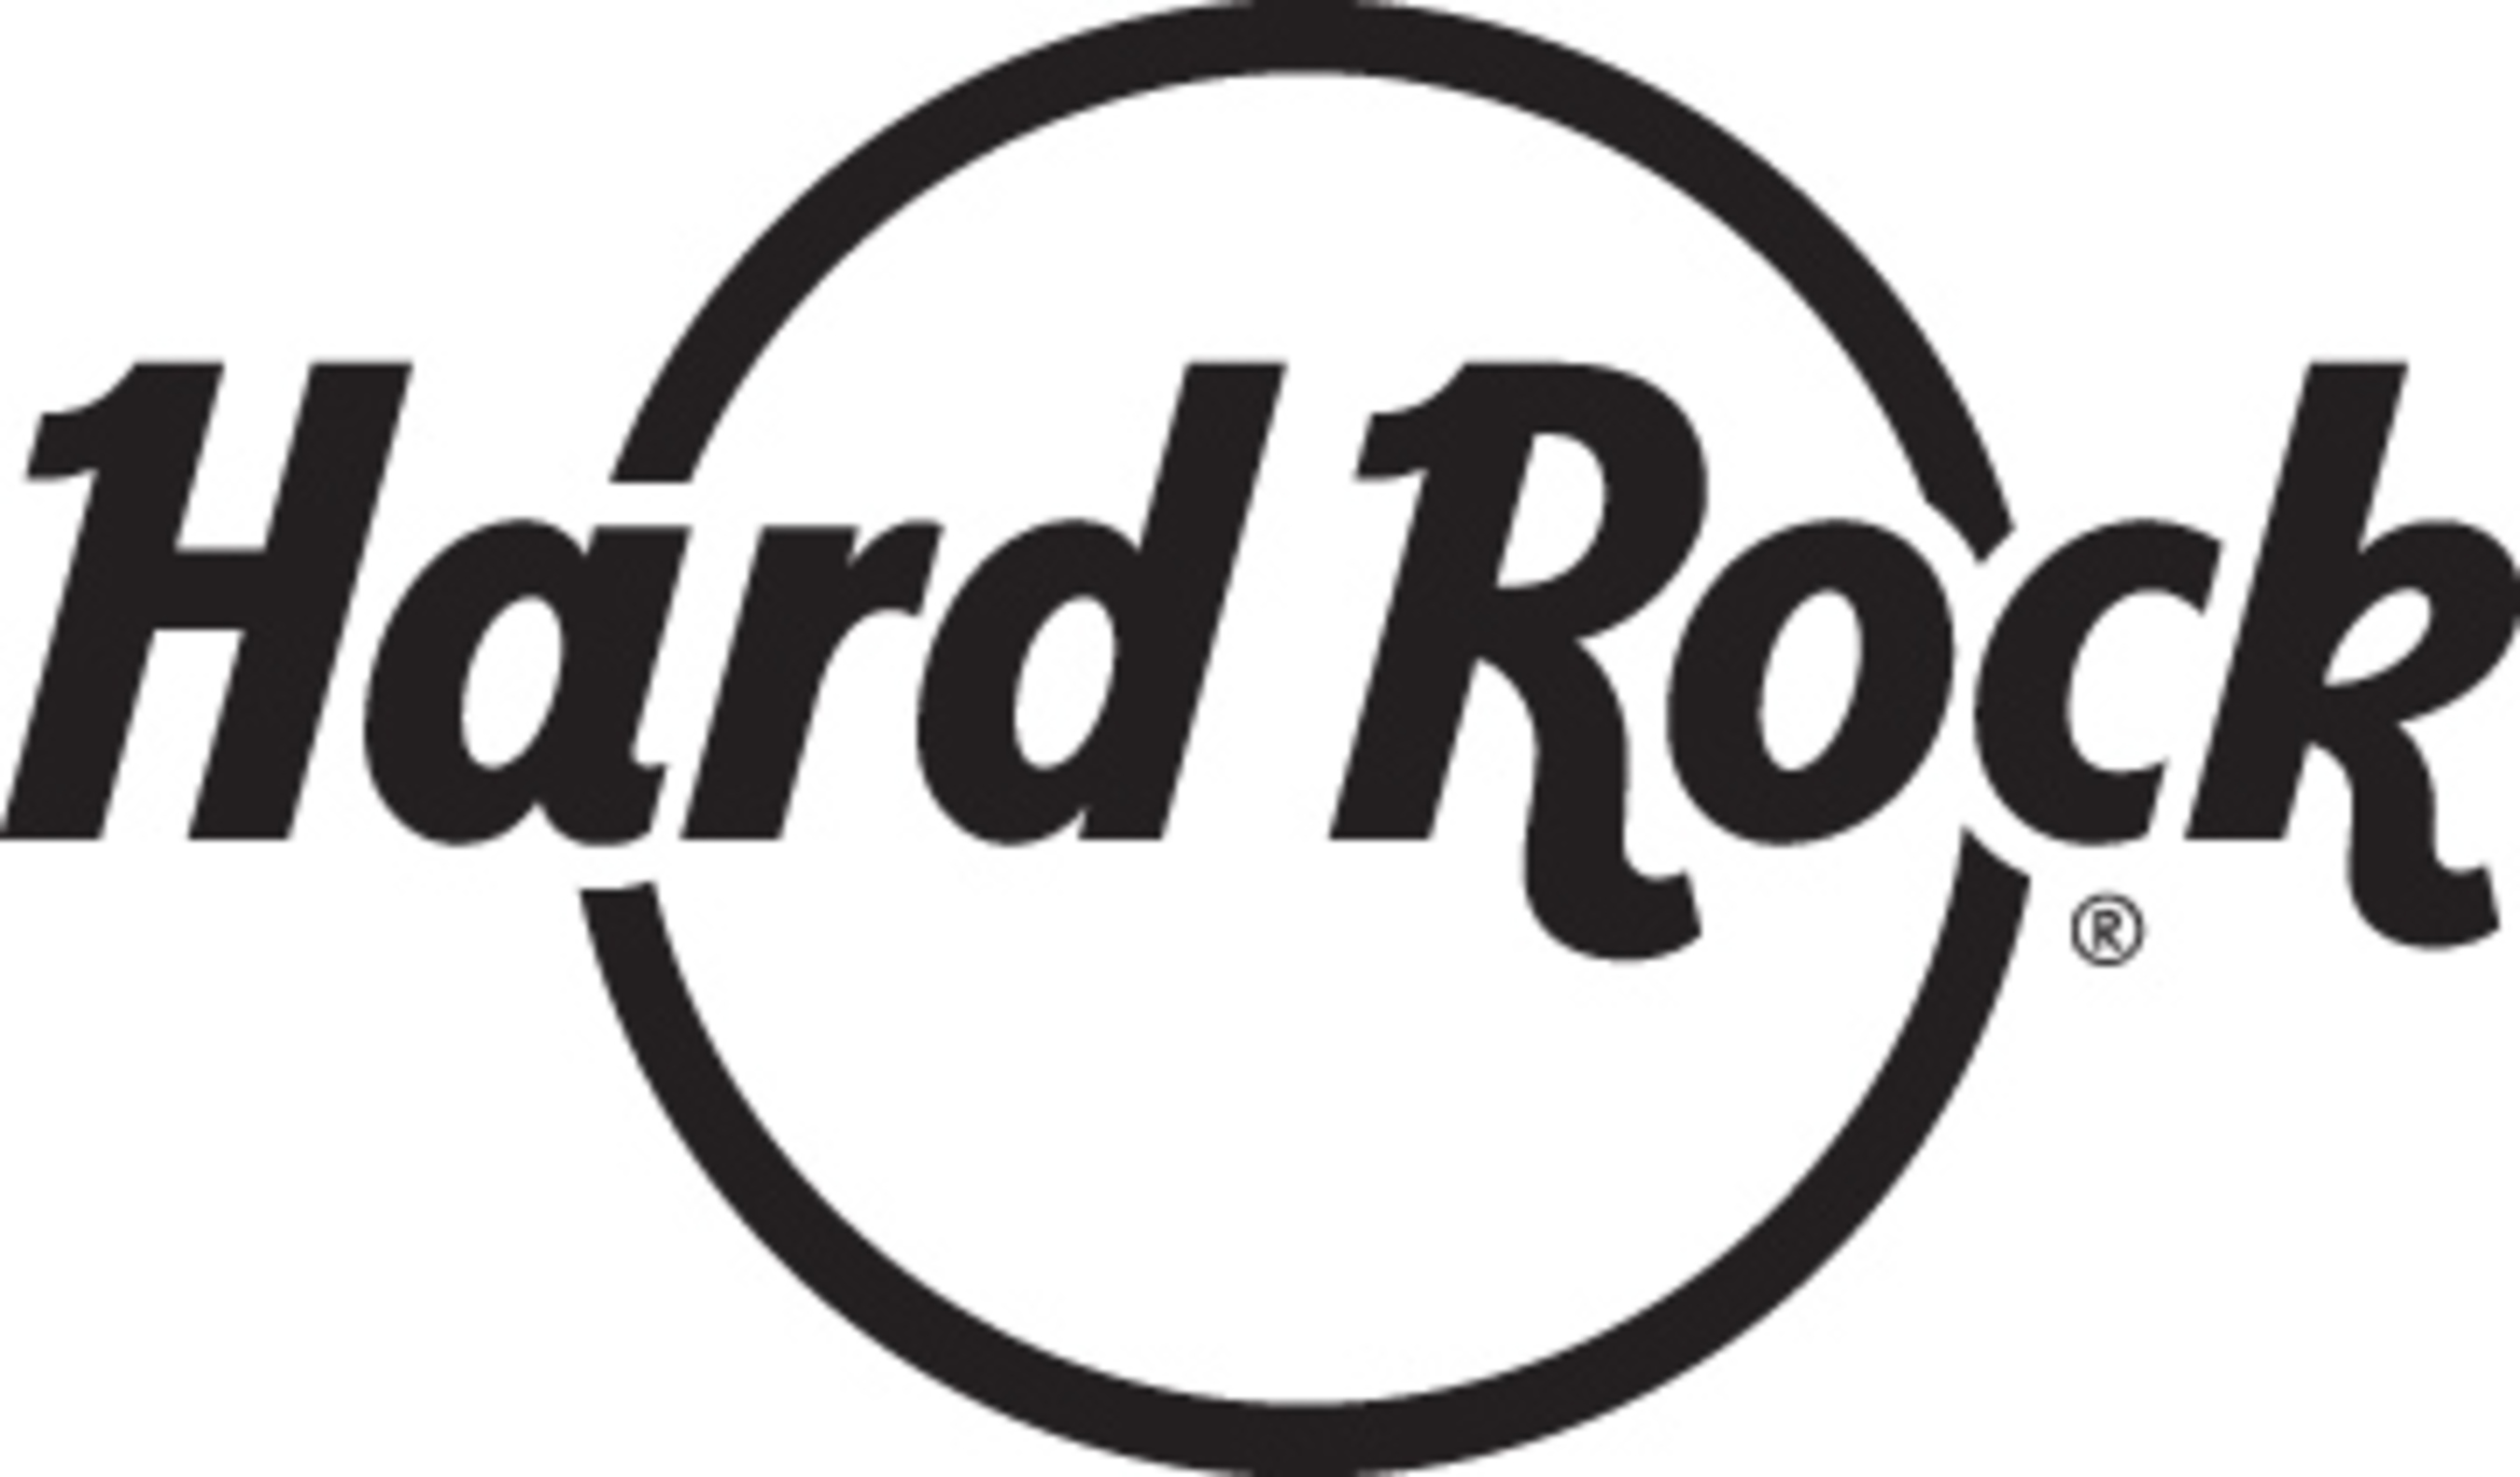 Hard Rock International. (PRNewsFoto/Hard Rock International) (PRNewsFoto/)